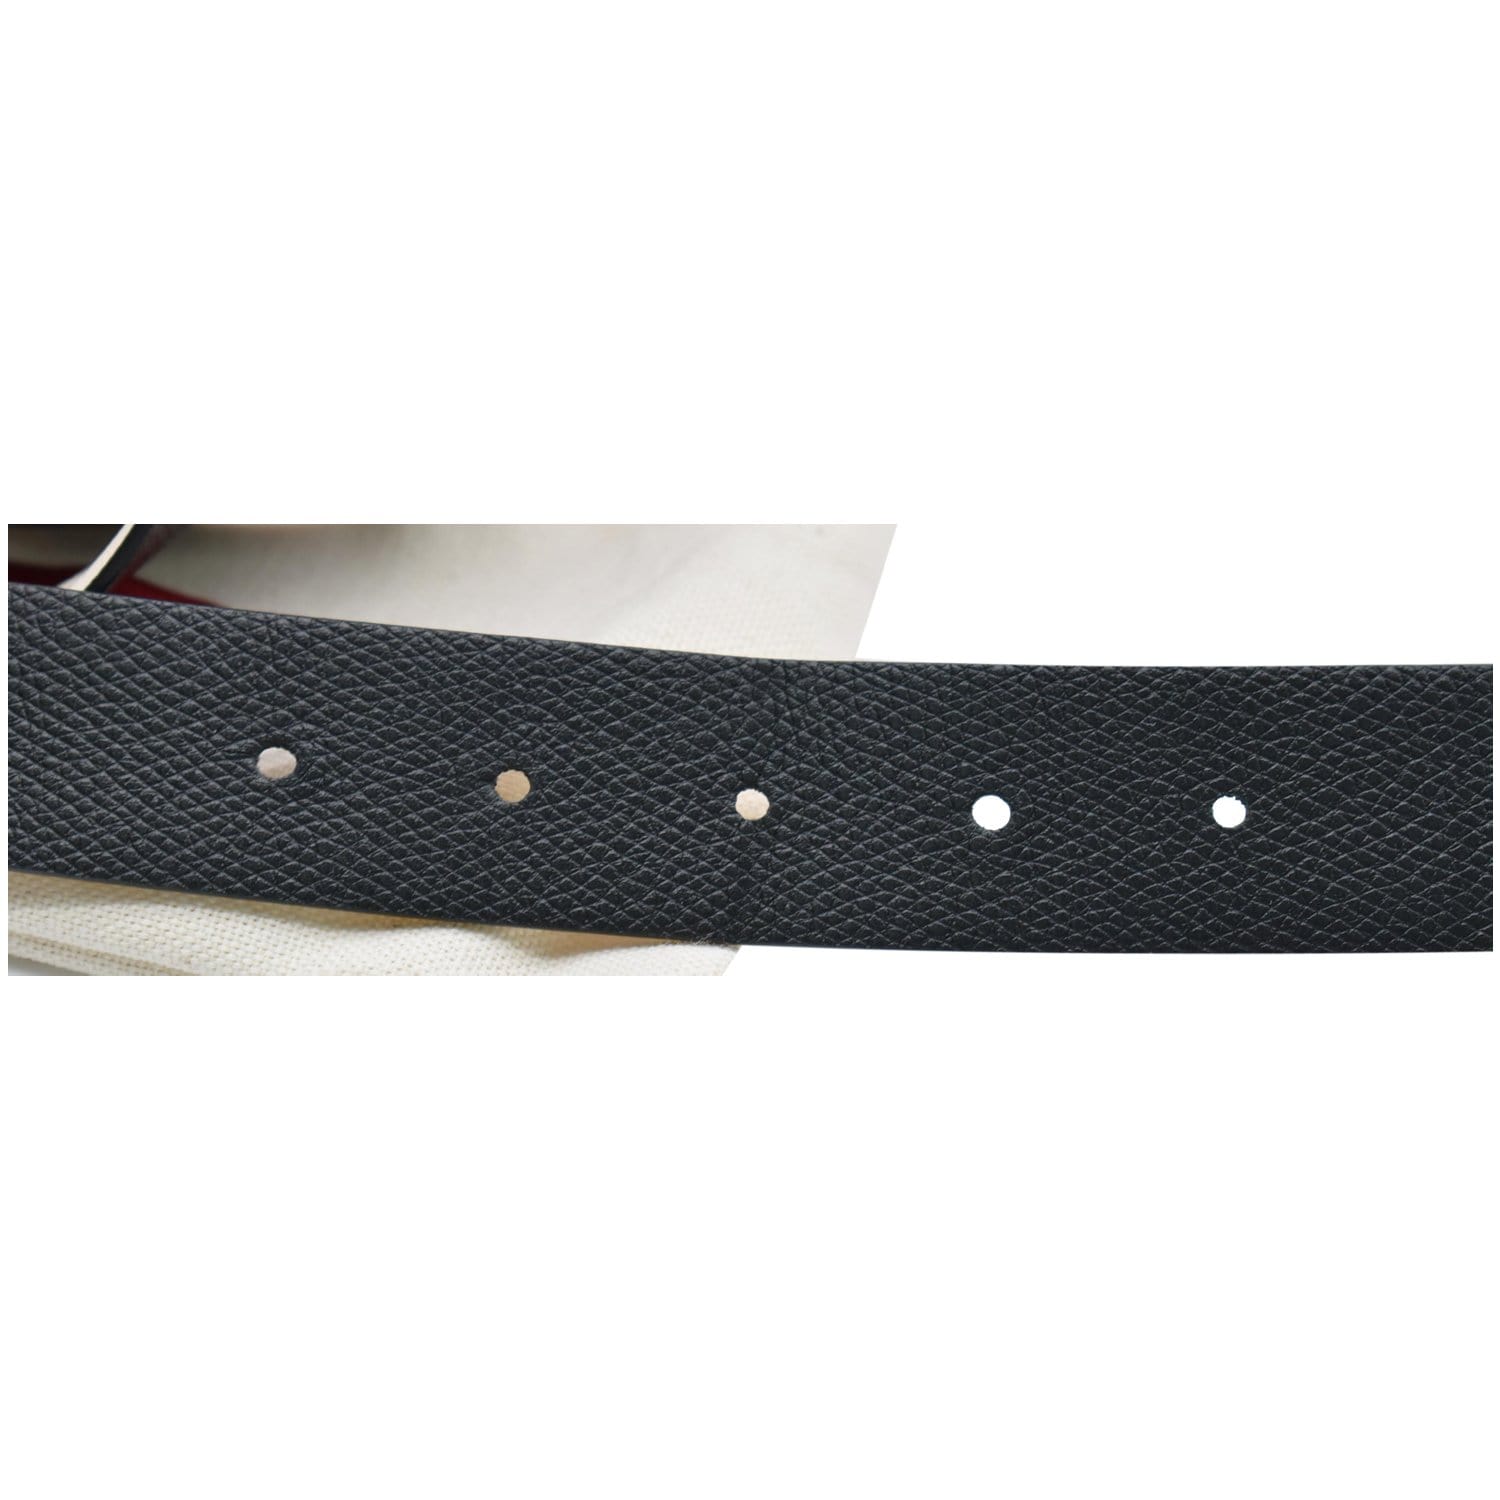 V Logo Signature 20 Reversible Leather Belt in Black - Valentino Garavani